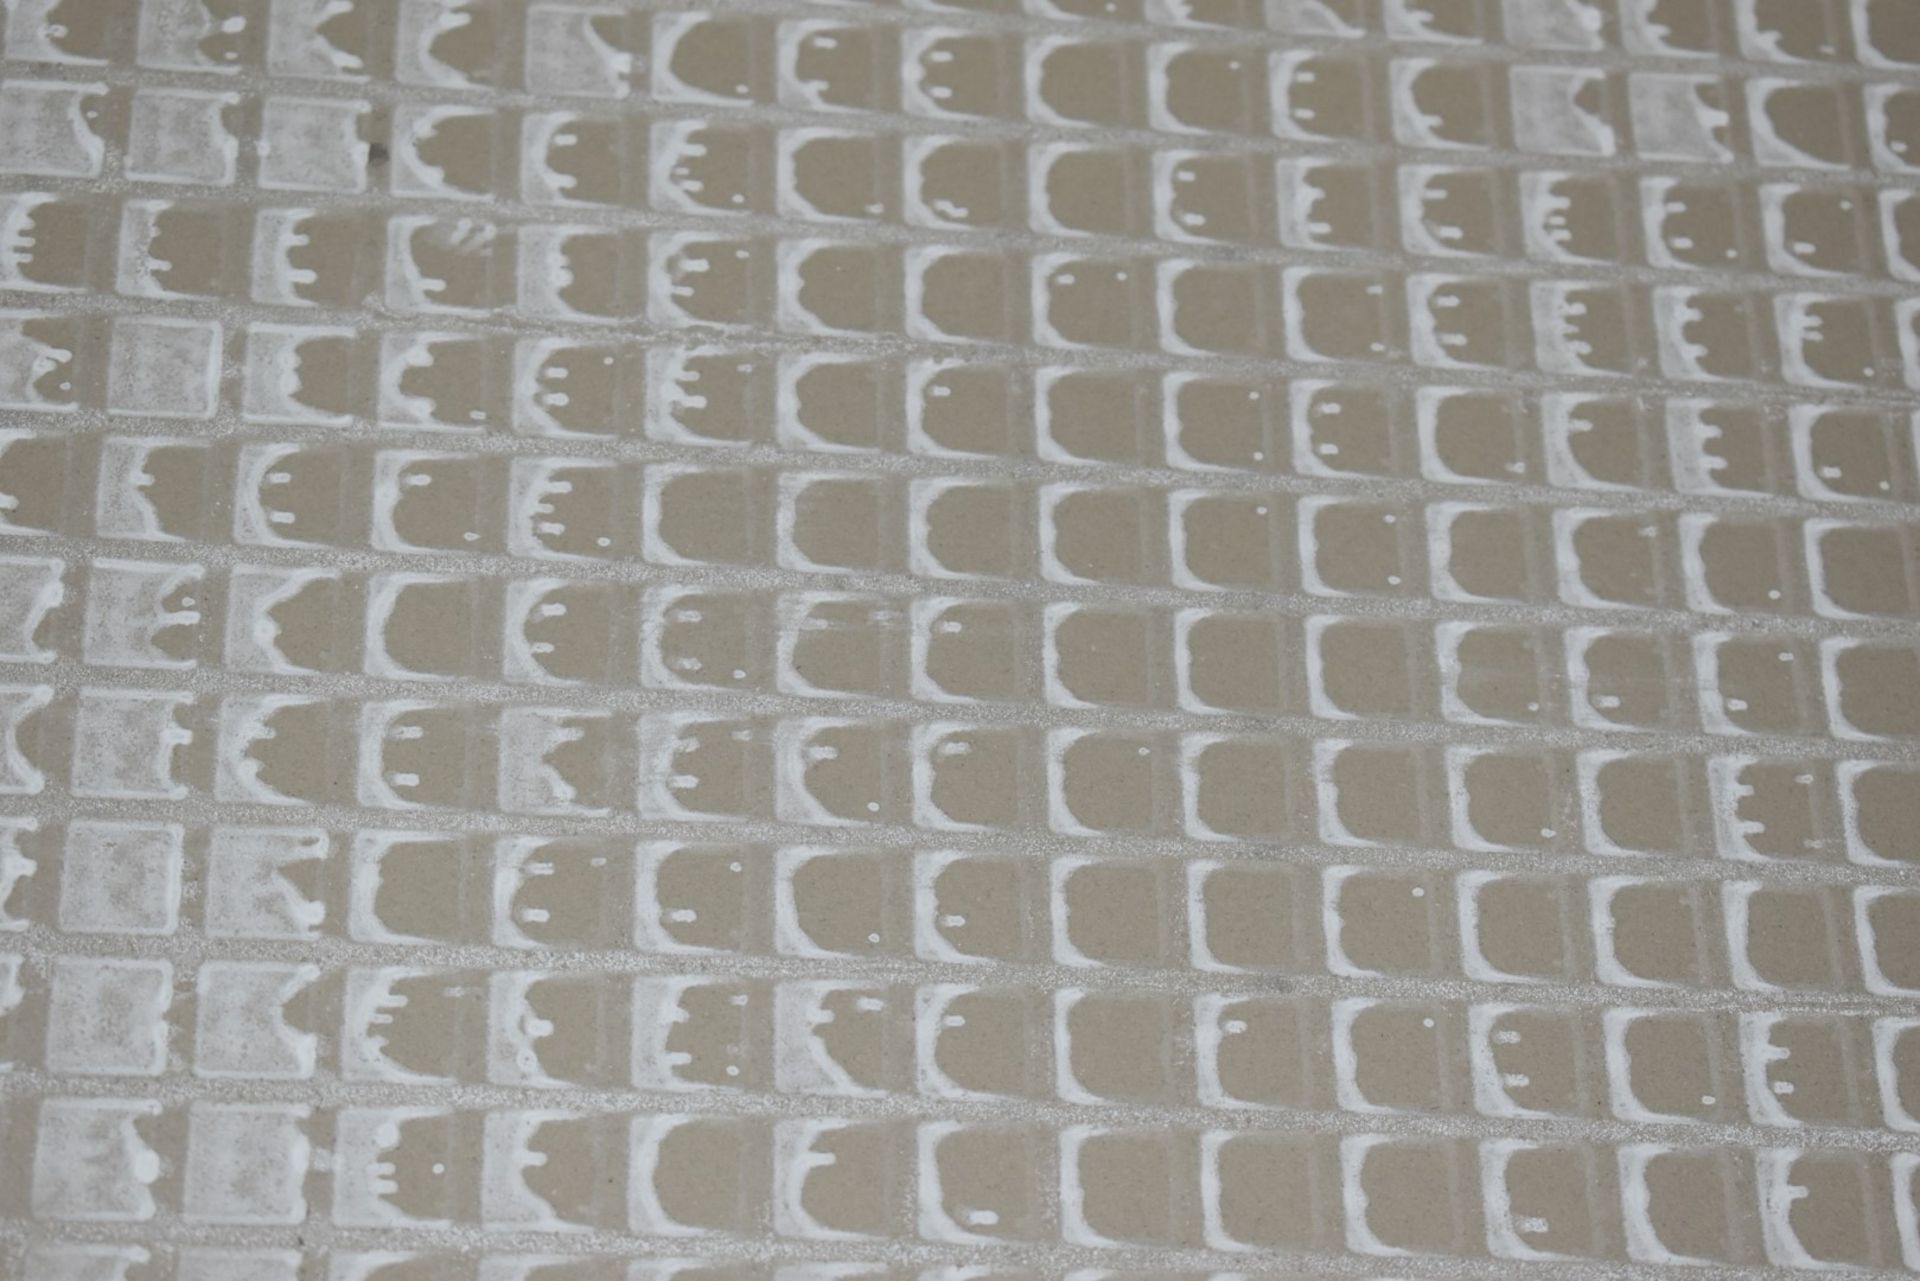 12 x Boxes of RAK Porcelain Floor or Wall Tiles - Concrete Rustic White Design - 30 x 60 cm Tiles - Image 6 of 8